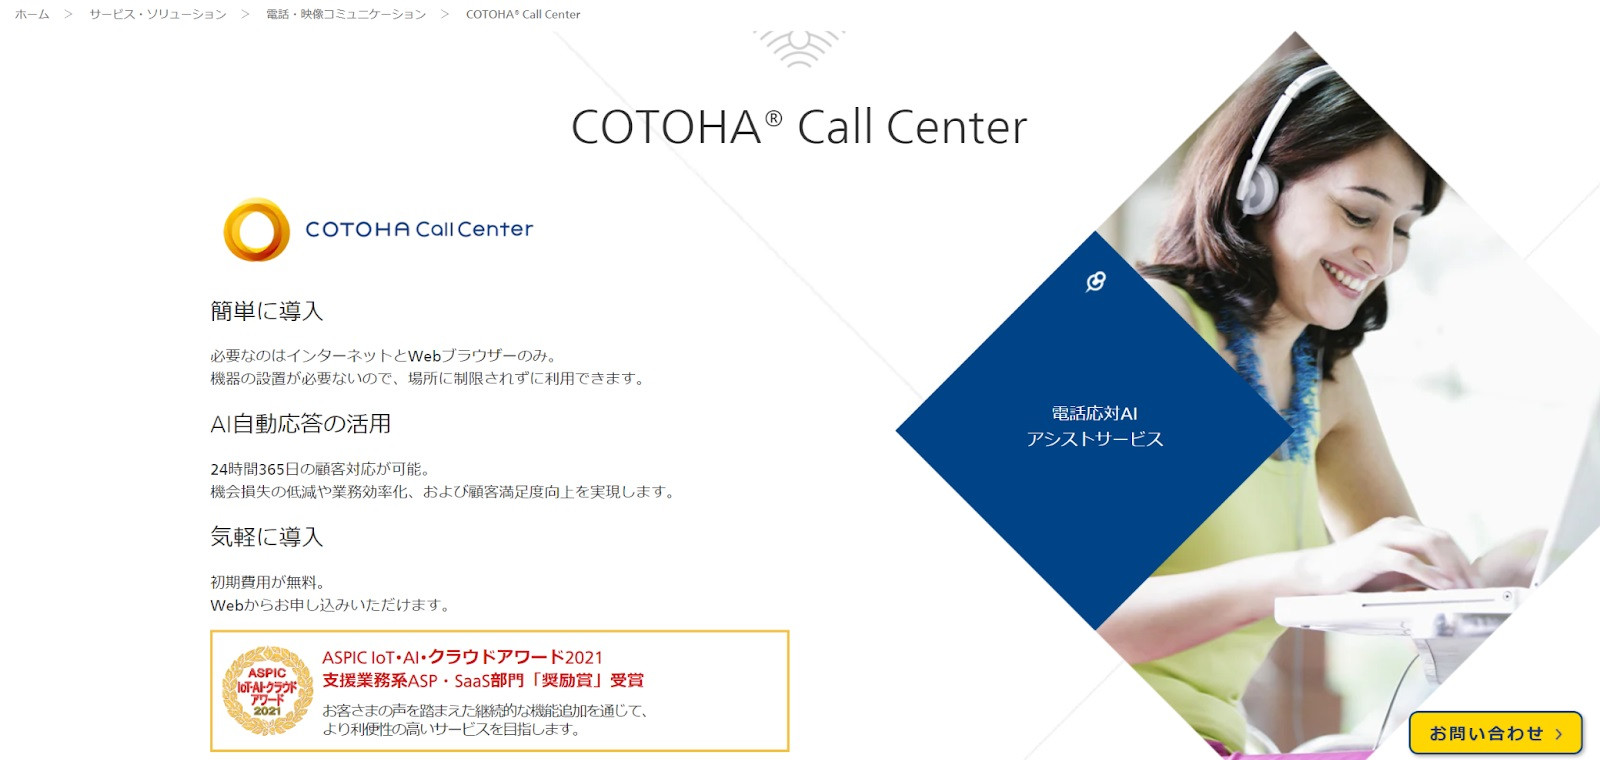 COTOHA Call Center